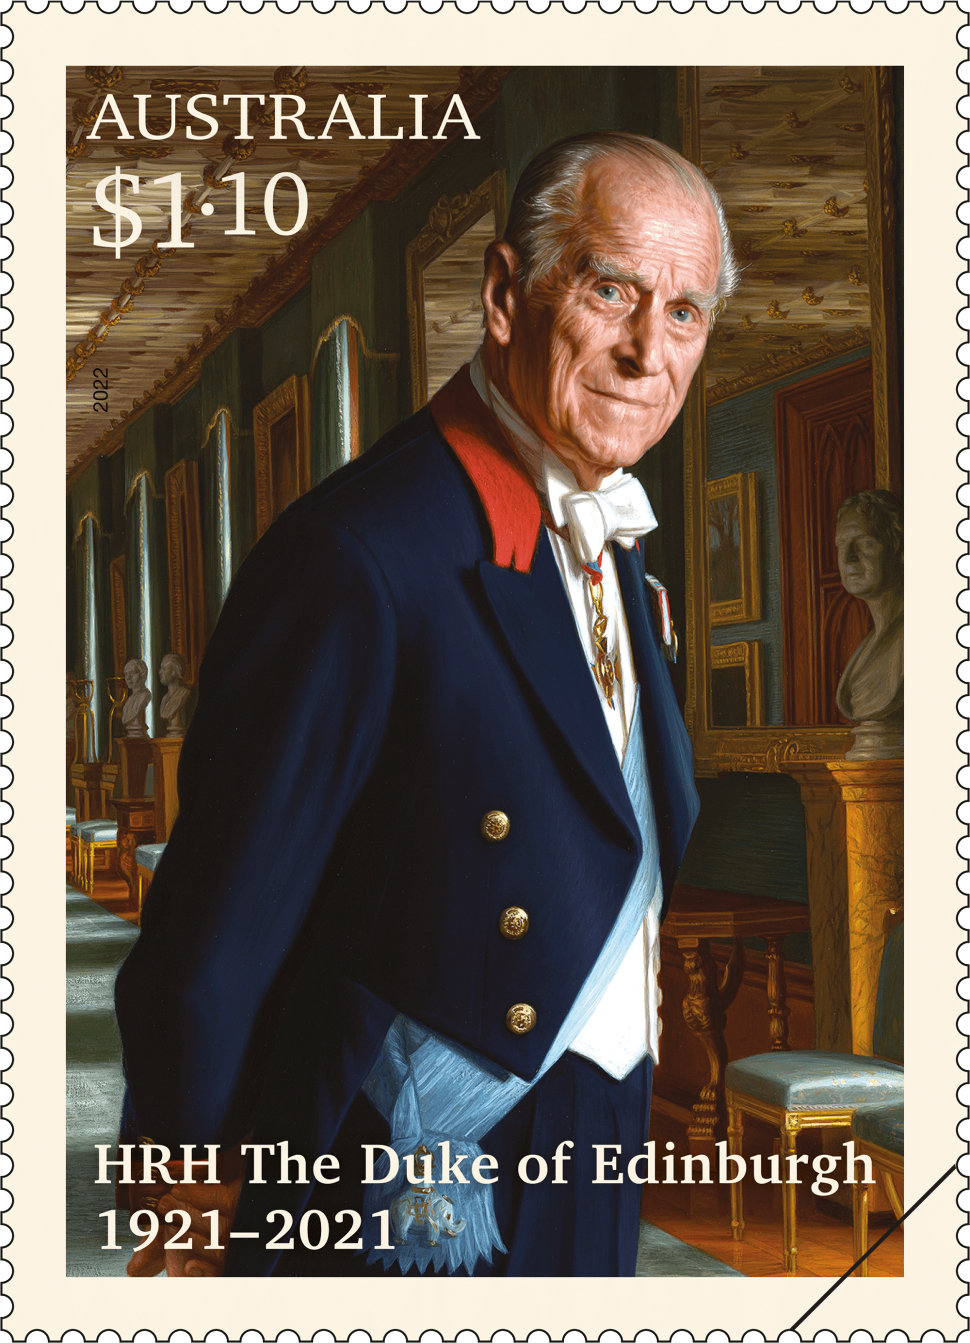 royal visit stamp australia